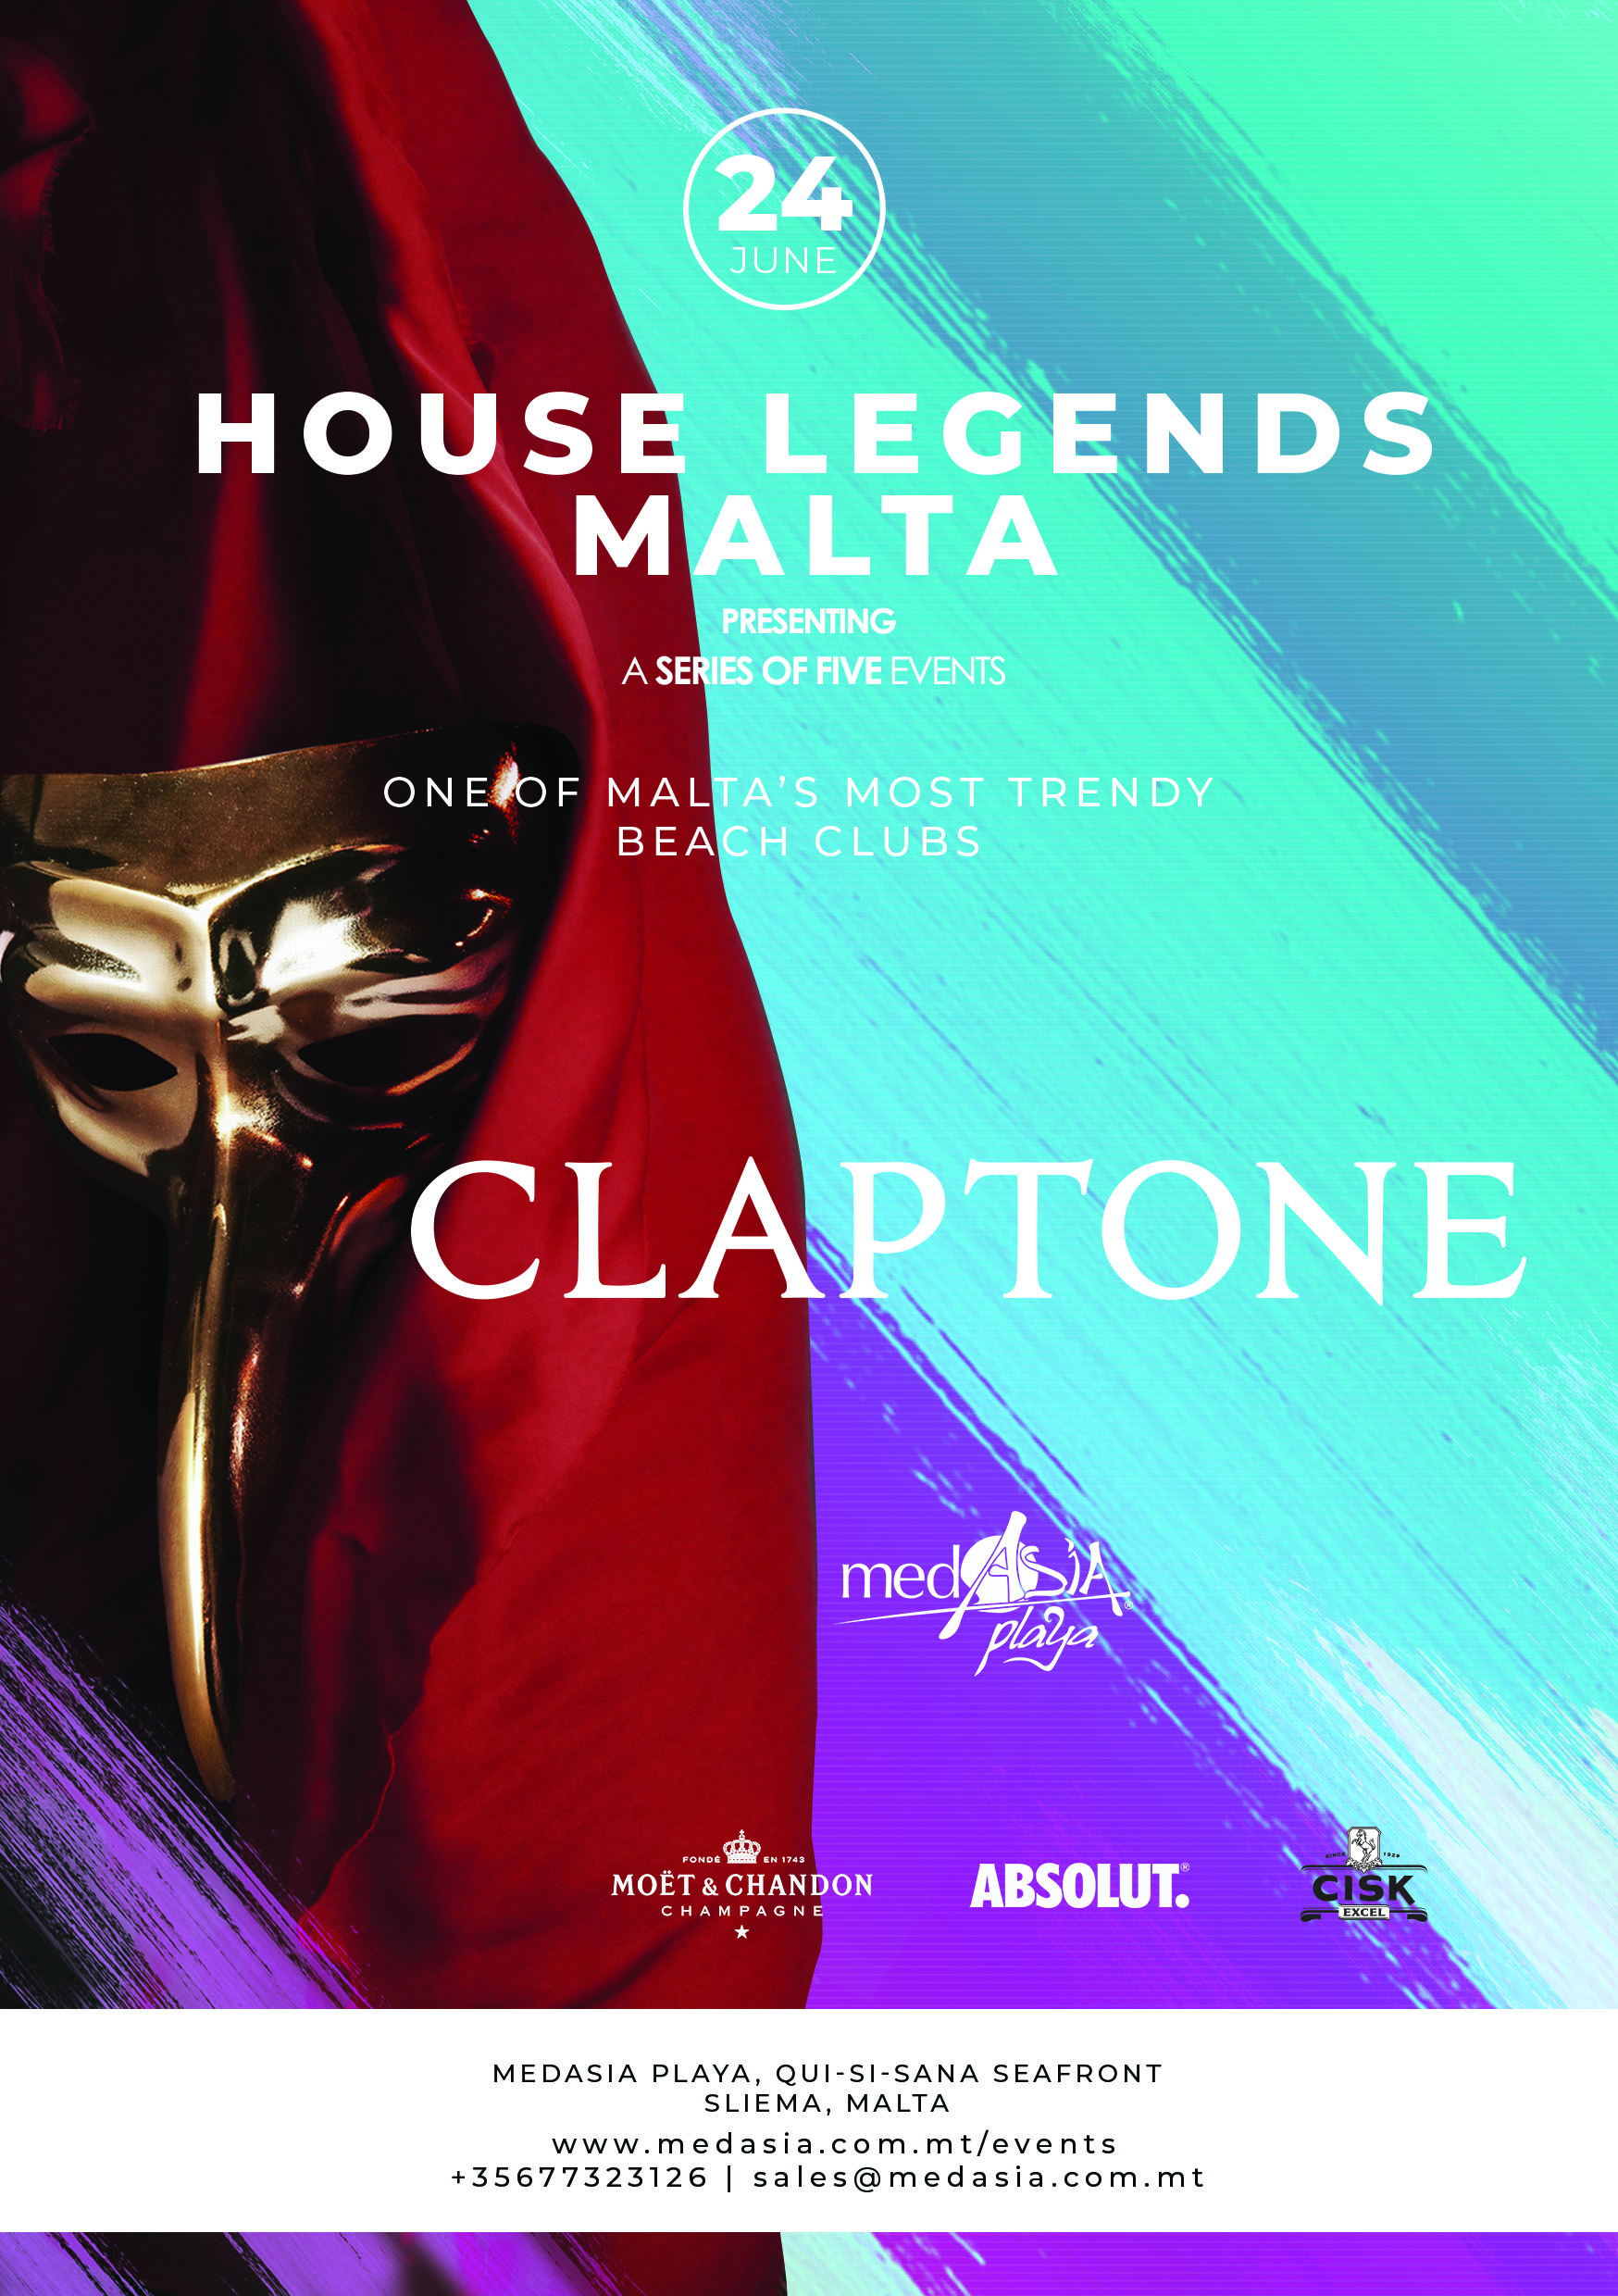 House Legends Malta - Claptone